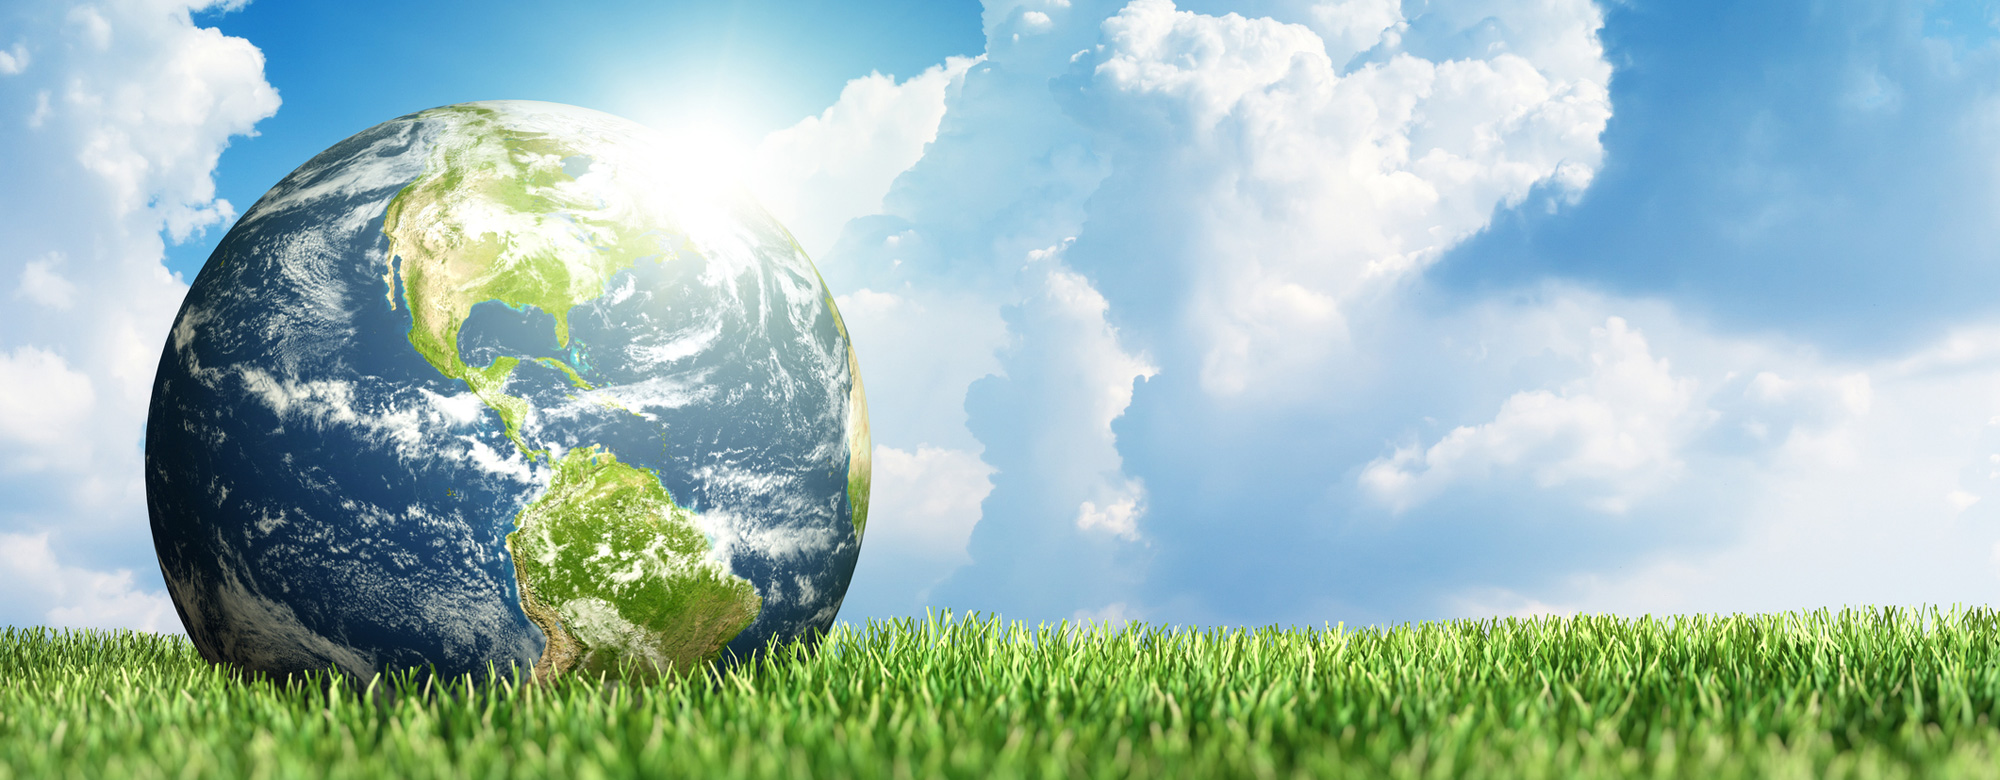 Ciclo di webinar sul “Doing Green Business” in Perù, Kazakistan, Kenya, Botswana, Etiopia e Cuba. Dal 23 settembre al 28 ottobre